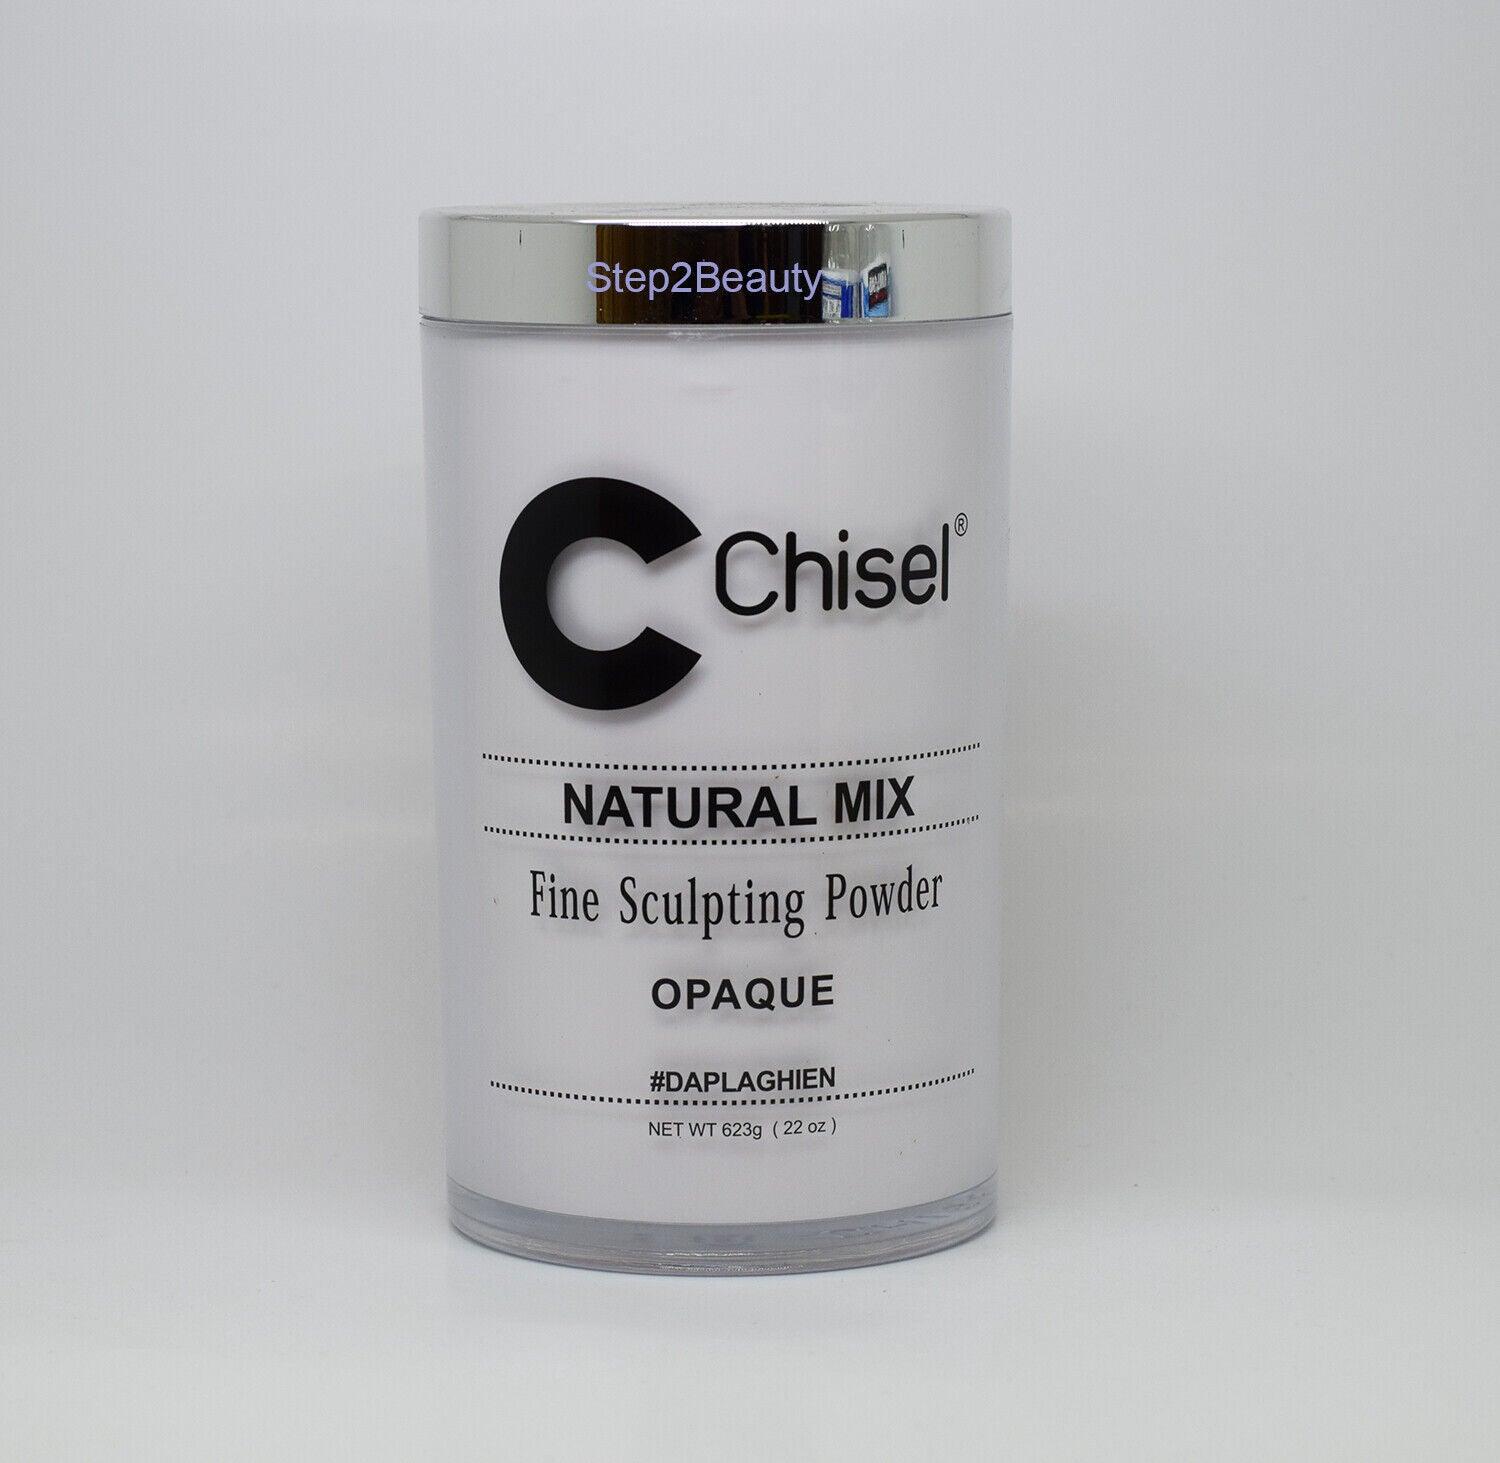 Chisel Daplaghien Powder 22 Oz - Natural Mix Opaque